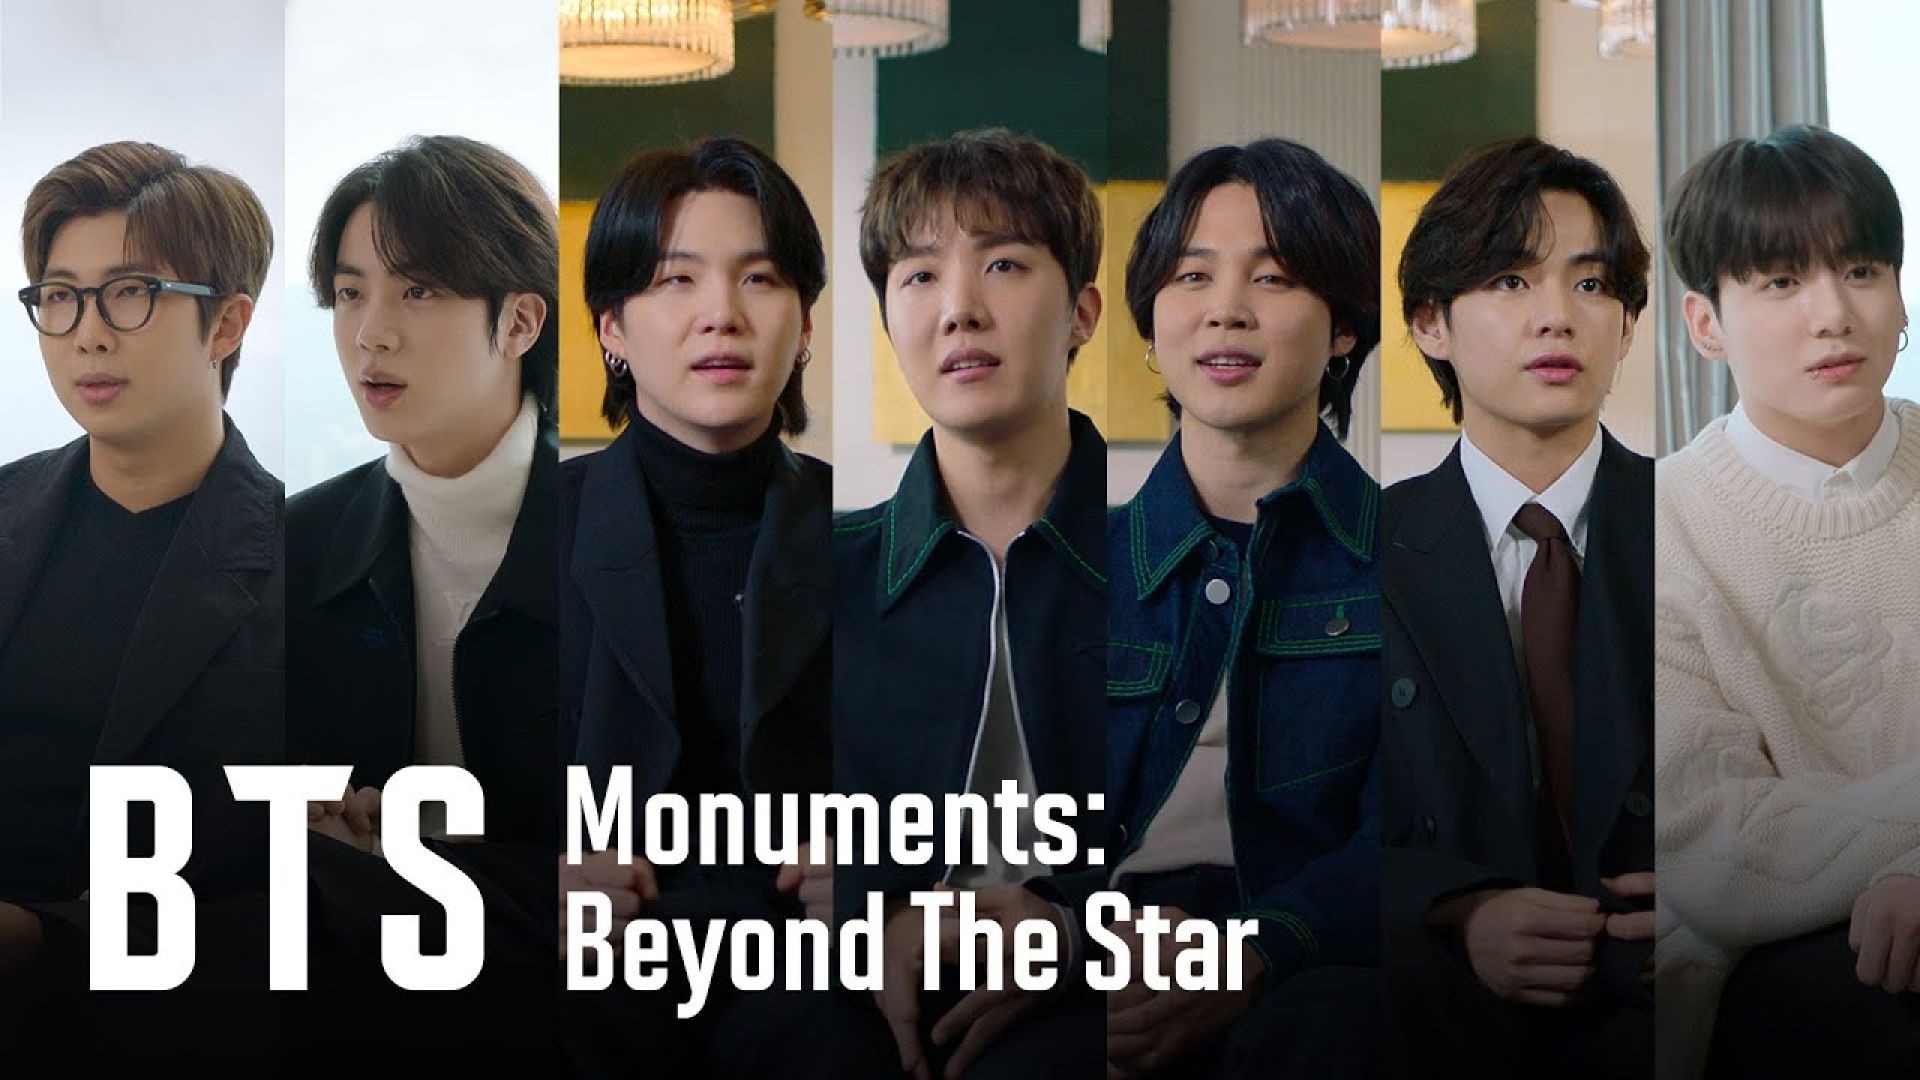 ep  6 - Begin & Again - BTS Monuments: Beyond The Star